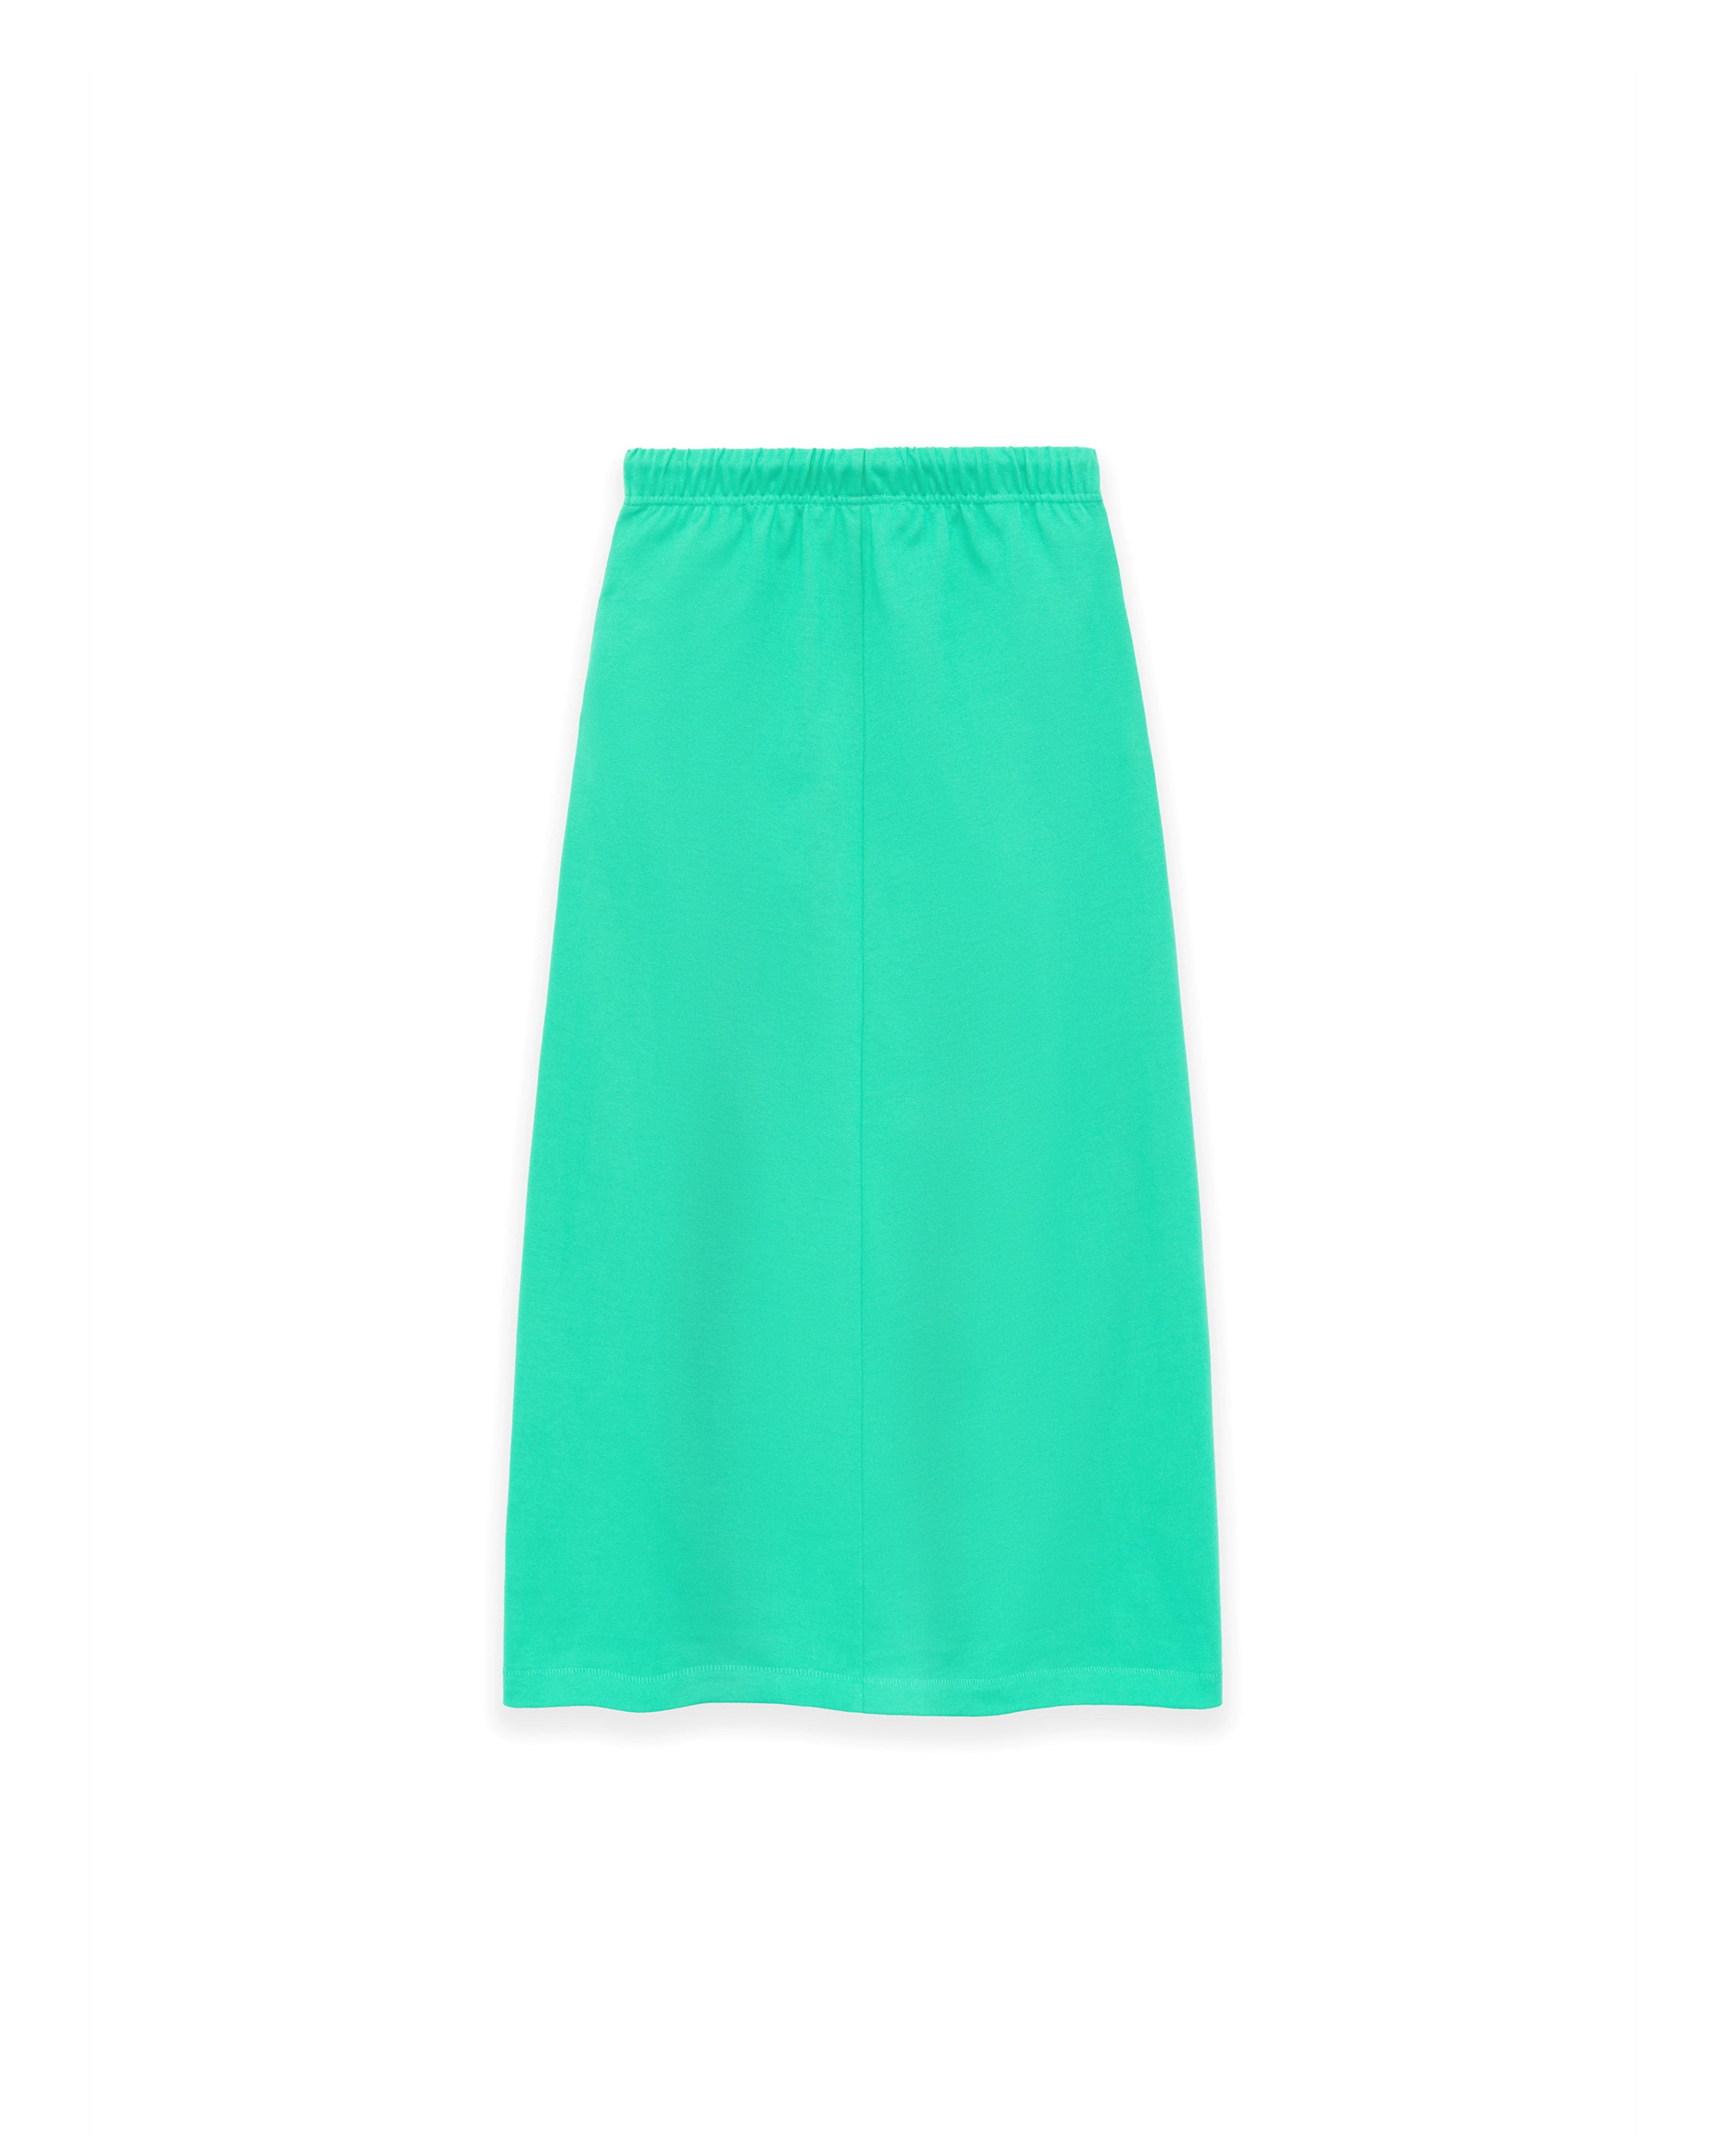 Essentials Long Skirt - Mint Leaf